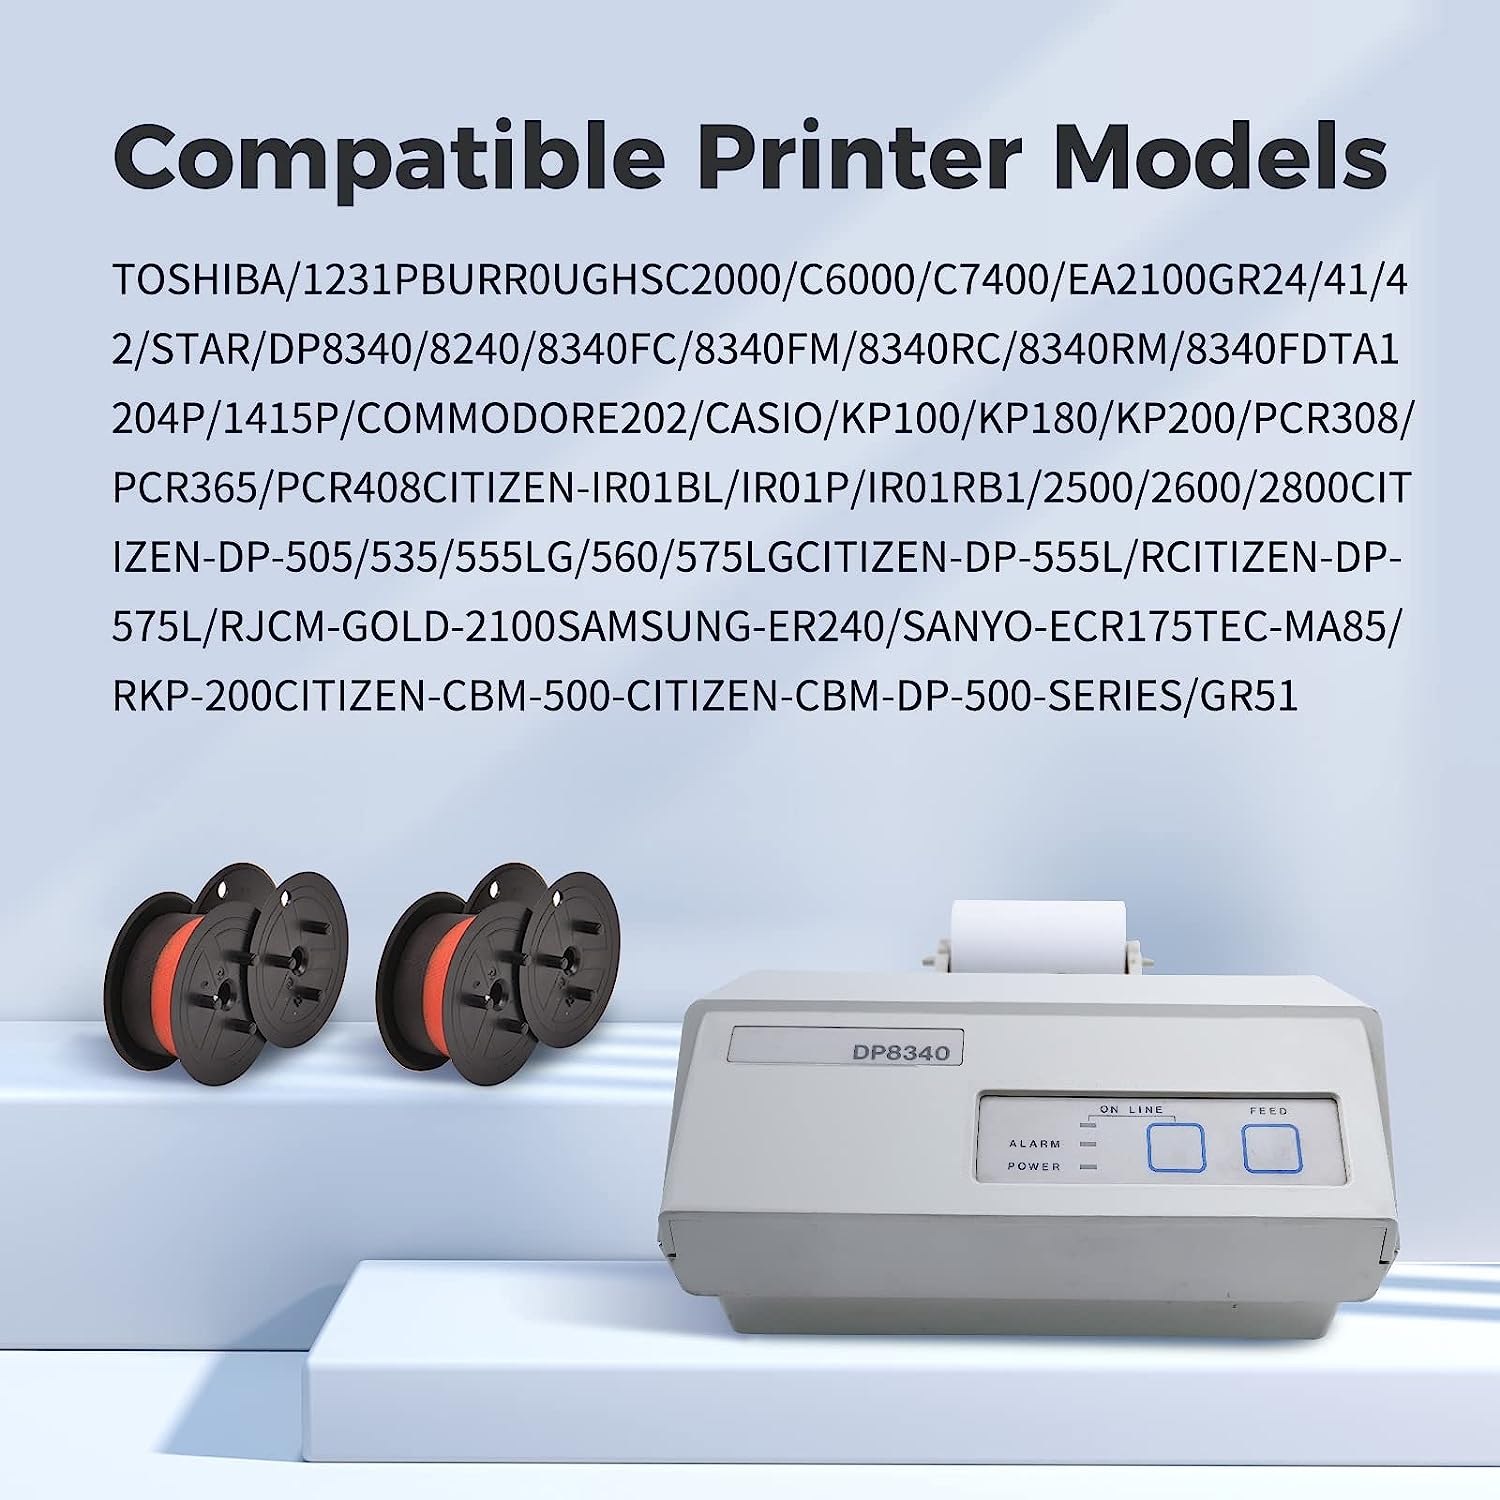 Porelon 11216 GR24 Porelon 11216 Universal Twin Spool Calculator Ribbon Compatible with NuKote BR80c Dataproducts R3027 Sharp El-1197 P-III Printer (Black/Red,12 Pack) - Linford Office:Printer Ink & Toner Cartridge